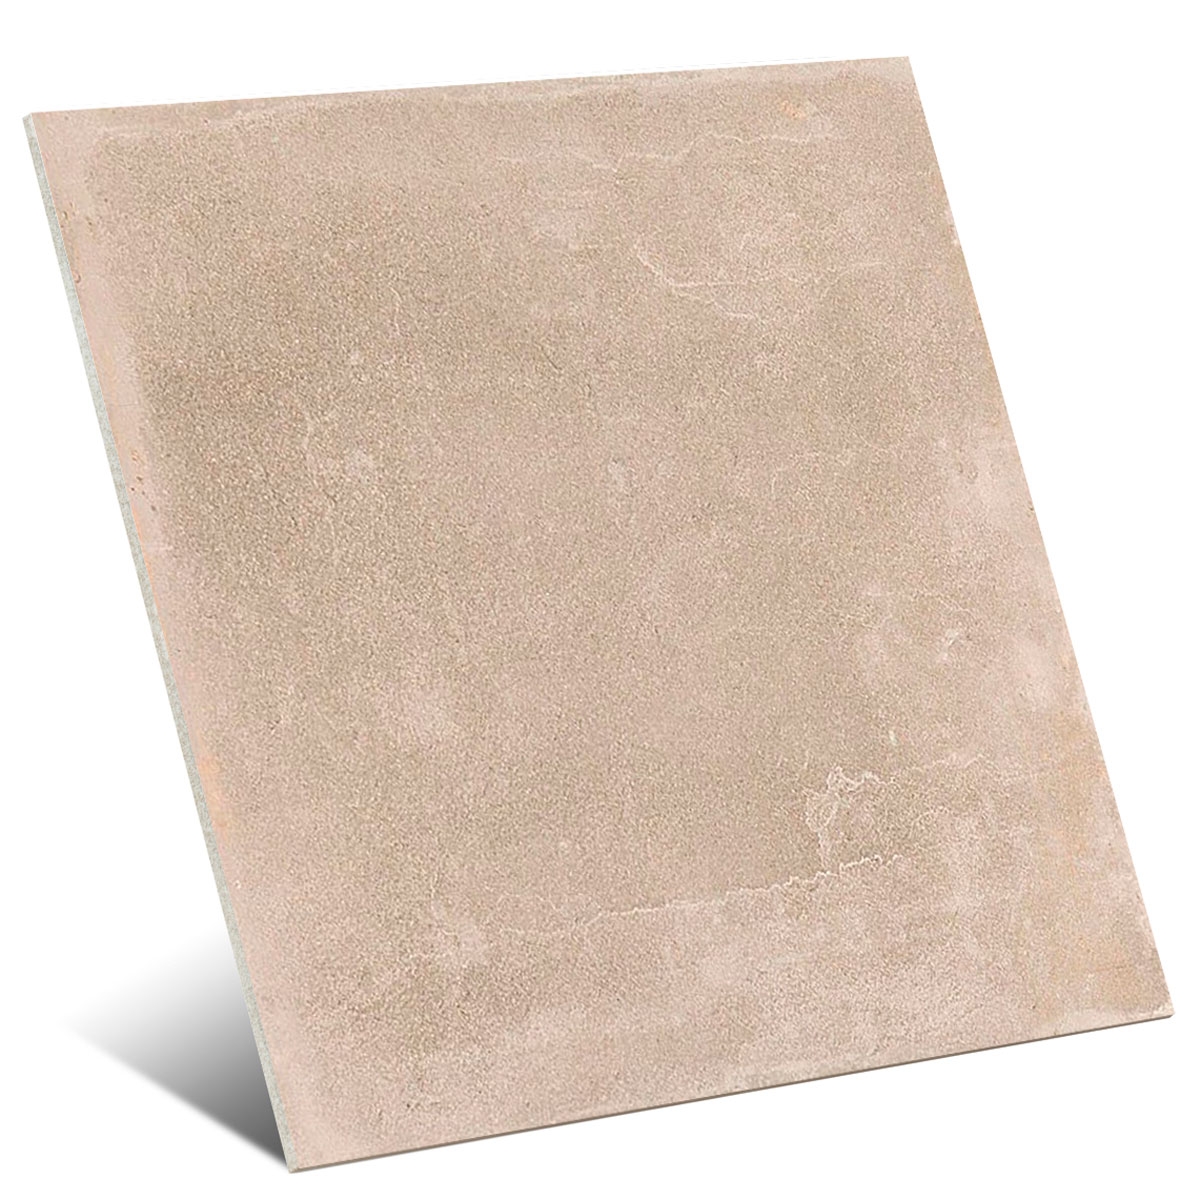 Titan Mud Decorstone 75x75 (caixa de 1,69 m2)